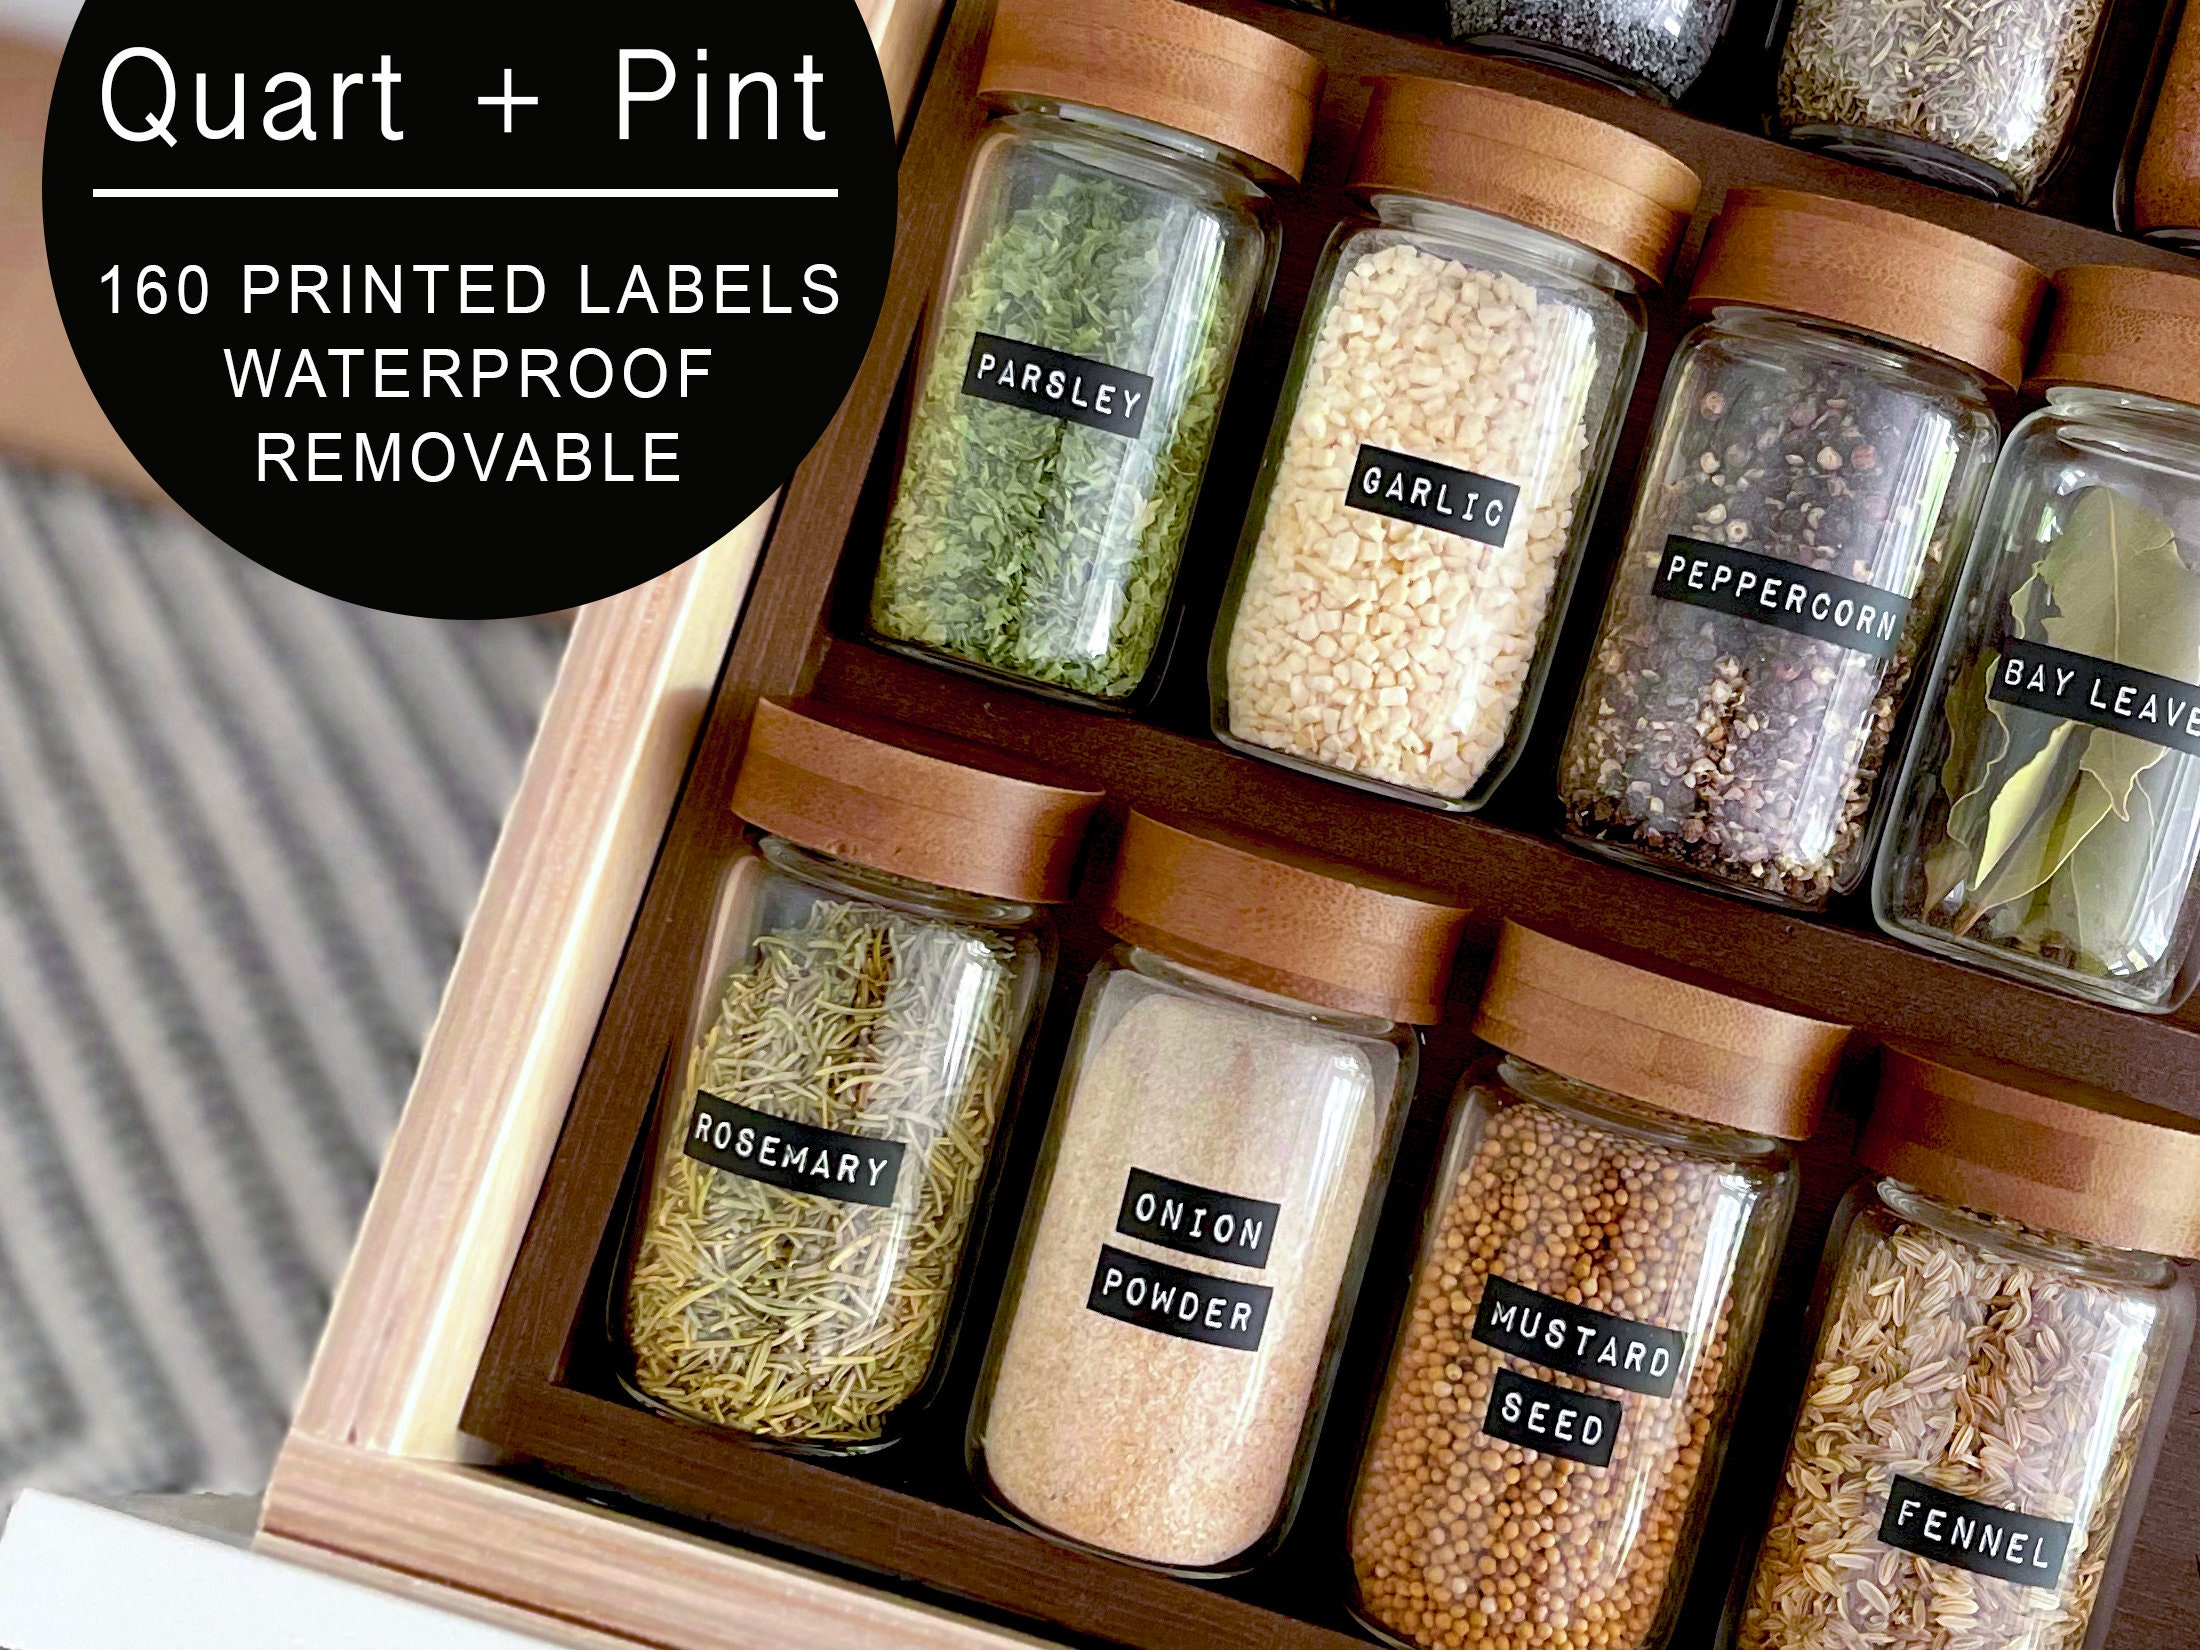 Pack 2 Round elegant black Spice jar Labels Sticker for Sale by